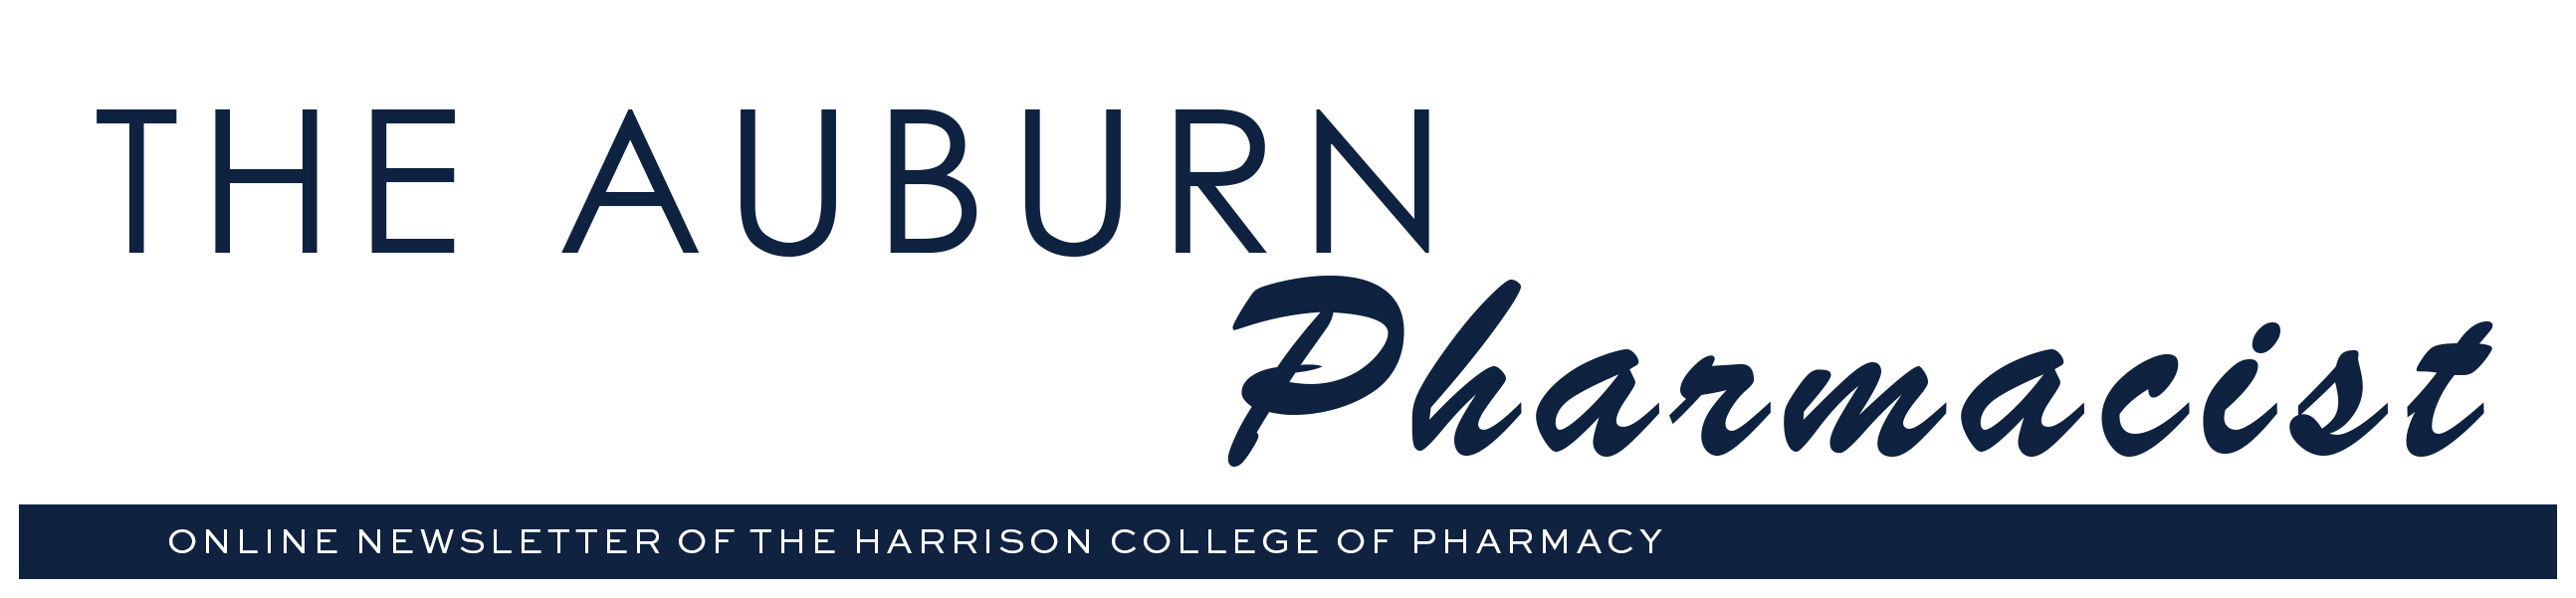 The Auburn Pharmacist logo